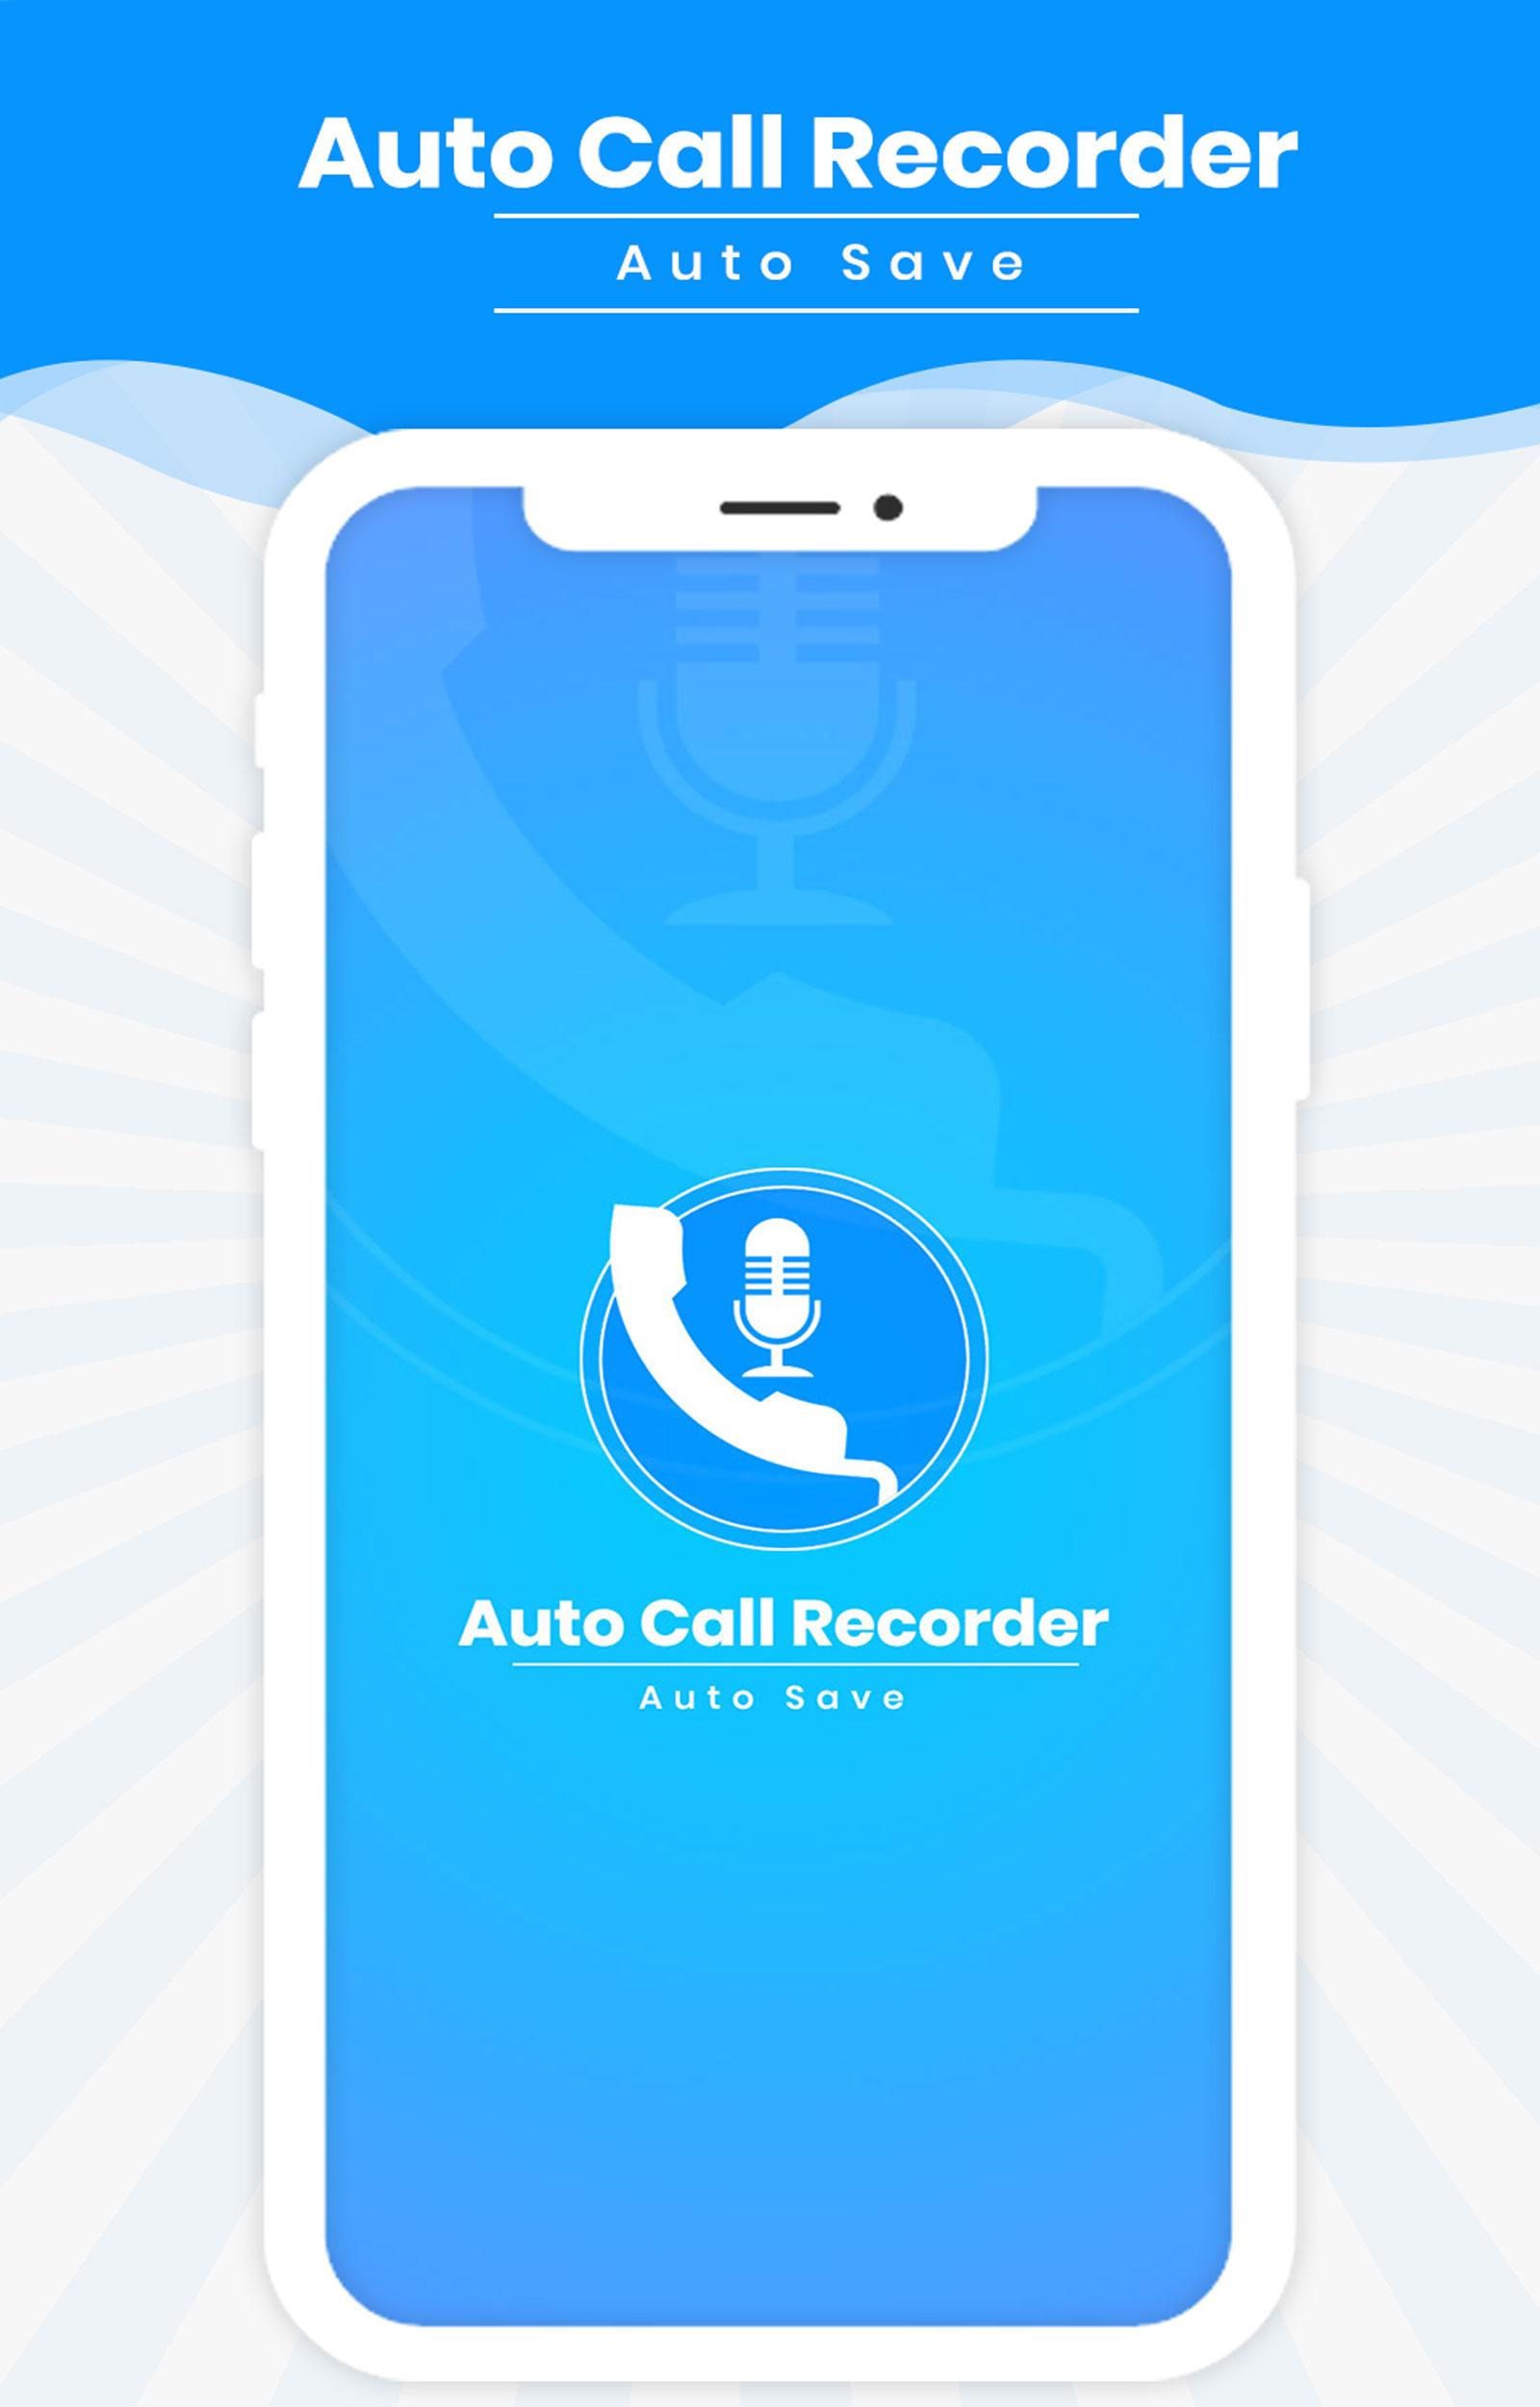 Auto Call Recorder - Auto Save 1.0.4 Screenshot 13